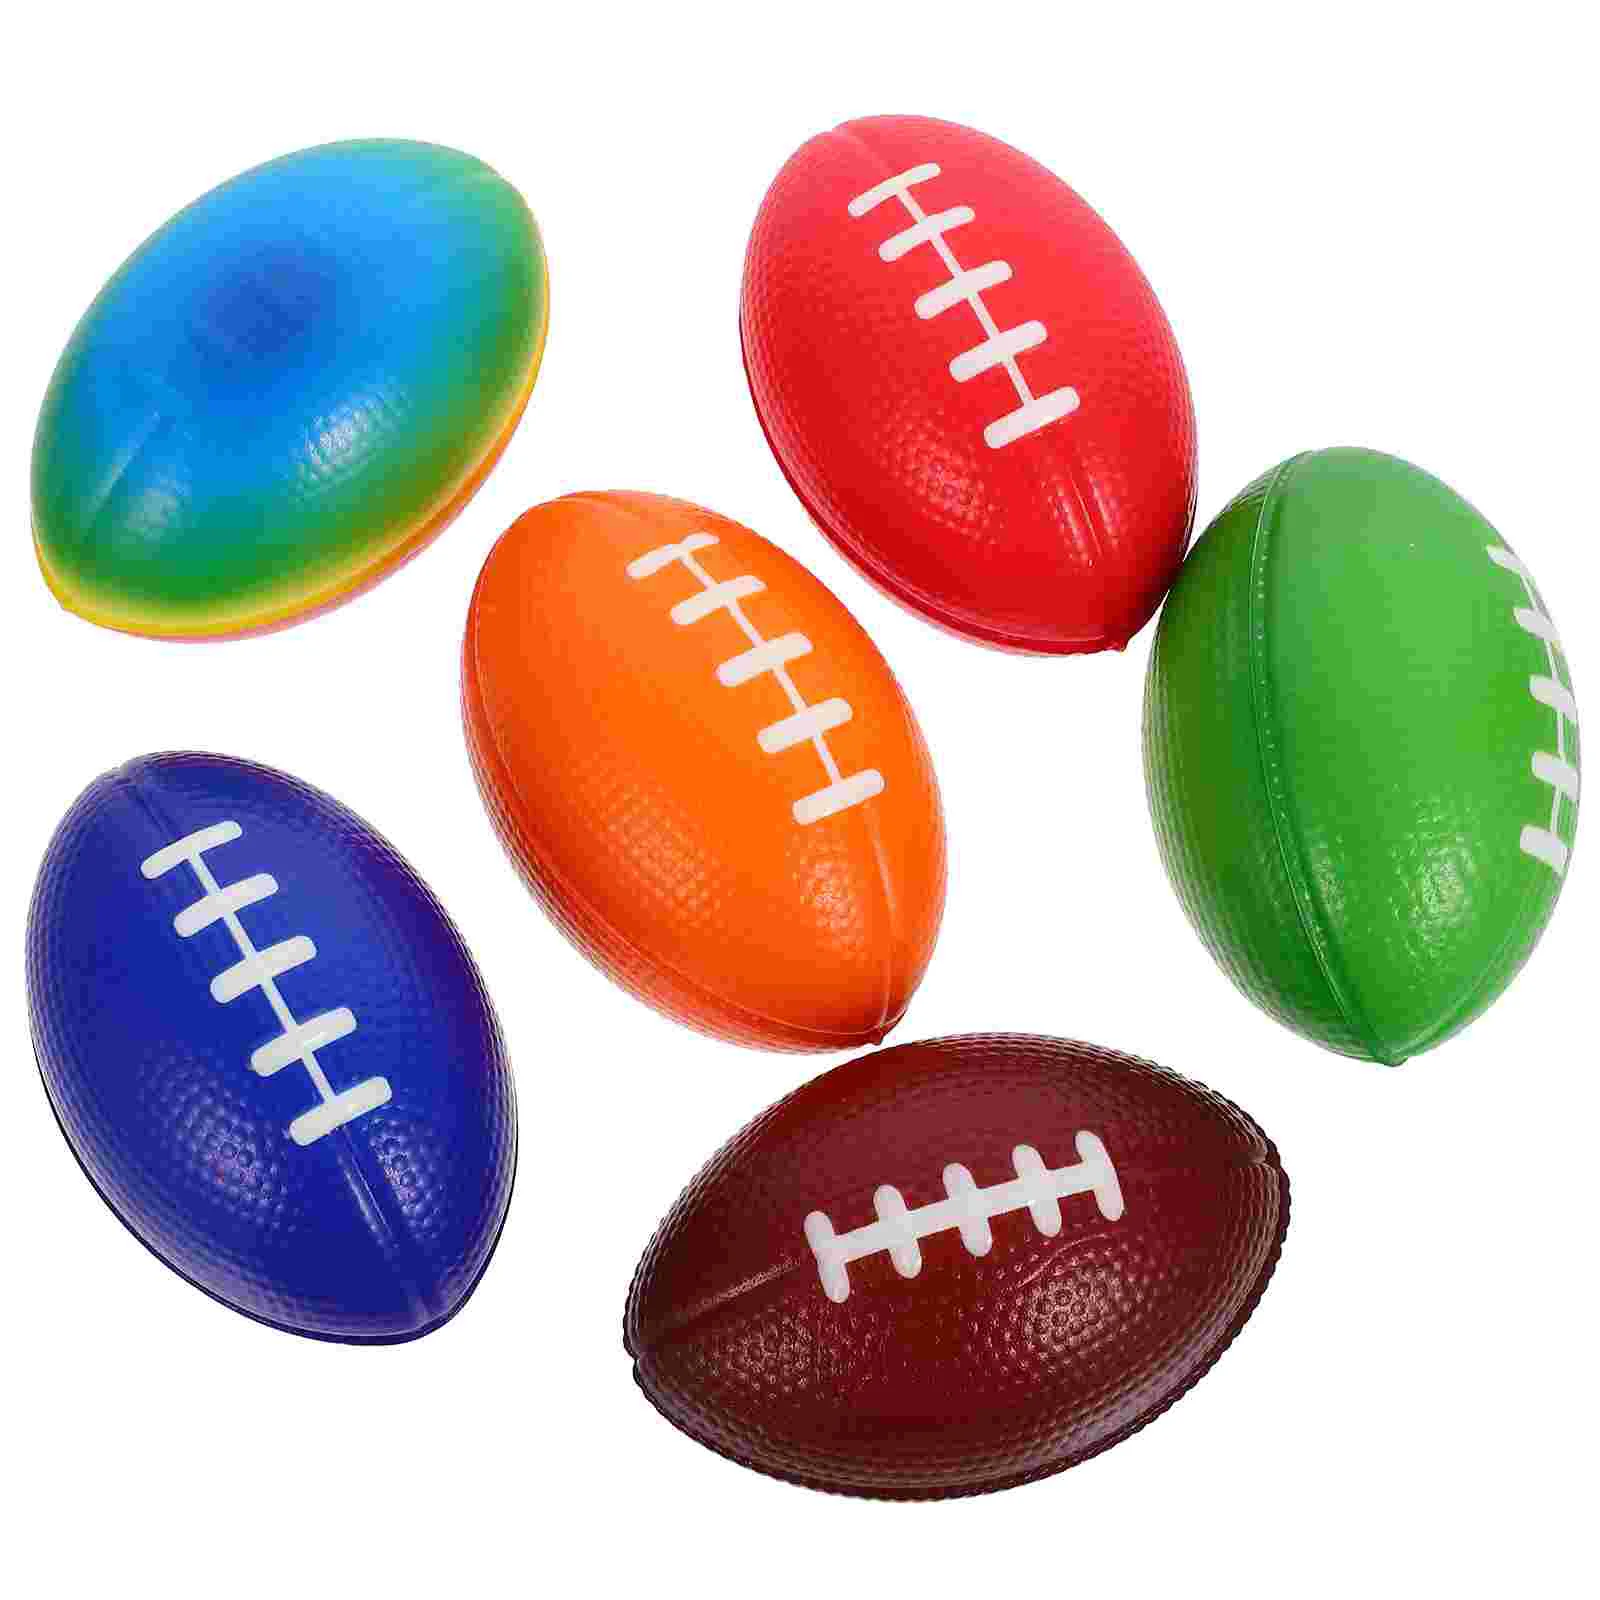 

6 Pcs Decoration Party Favors Mini PU Sports Ball Football (Mixed Color) 6pcs Footballs Small Rugby Decorations